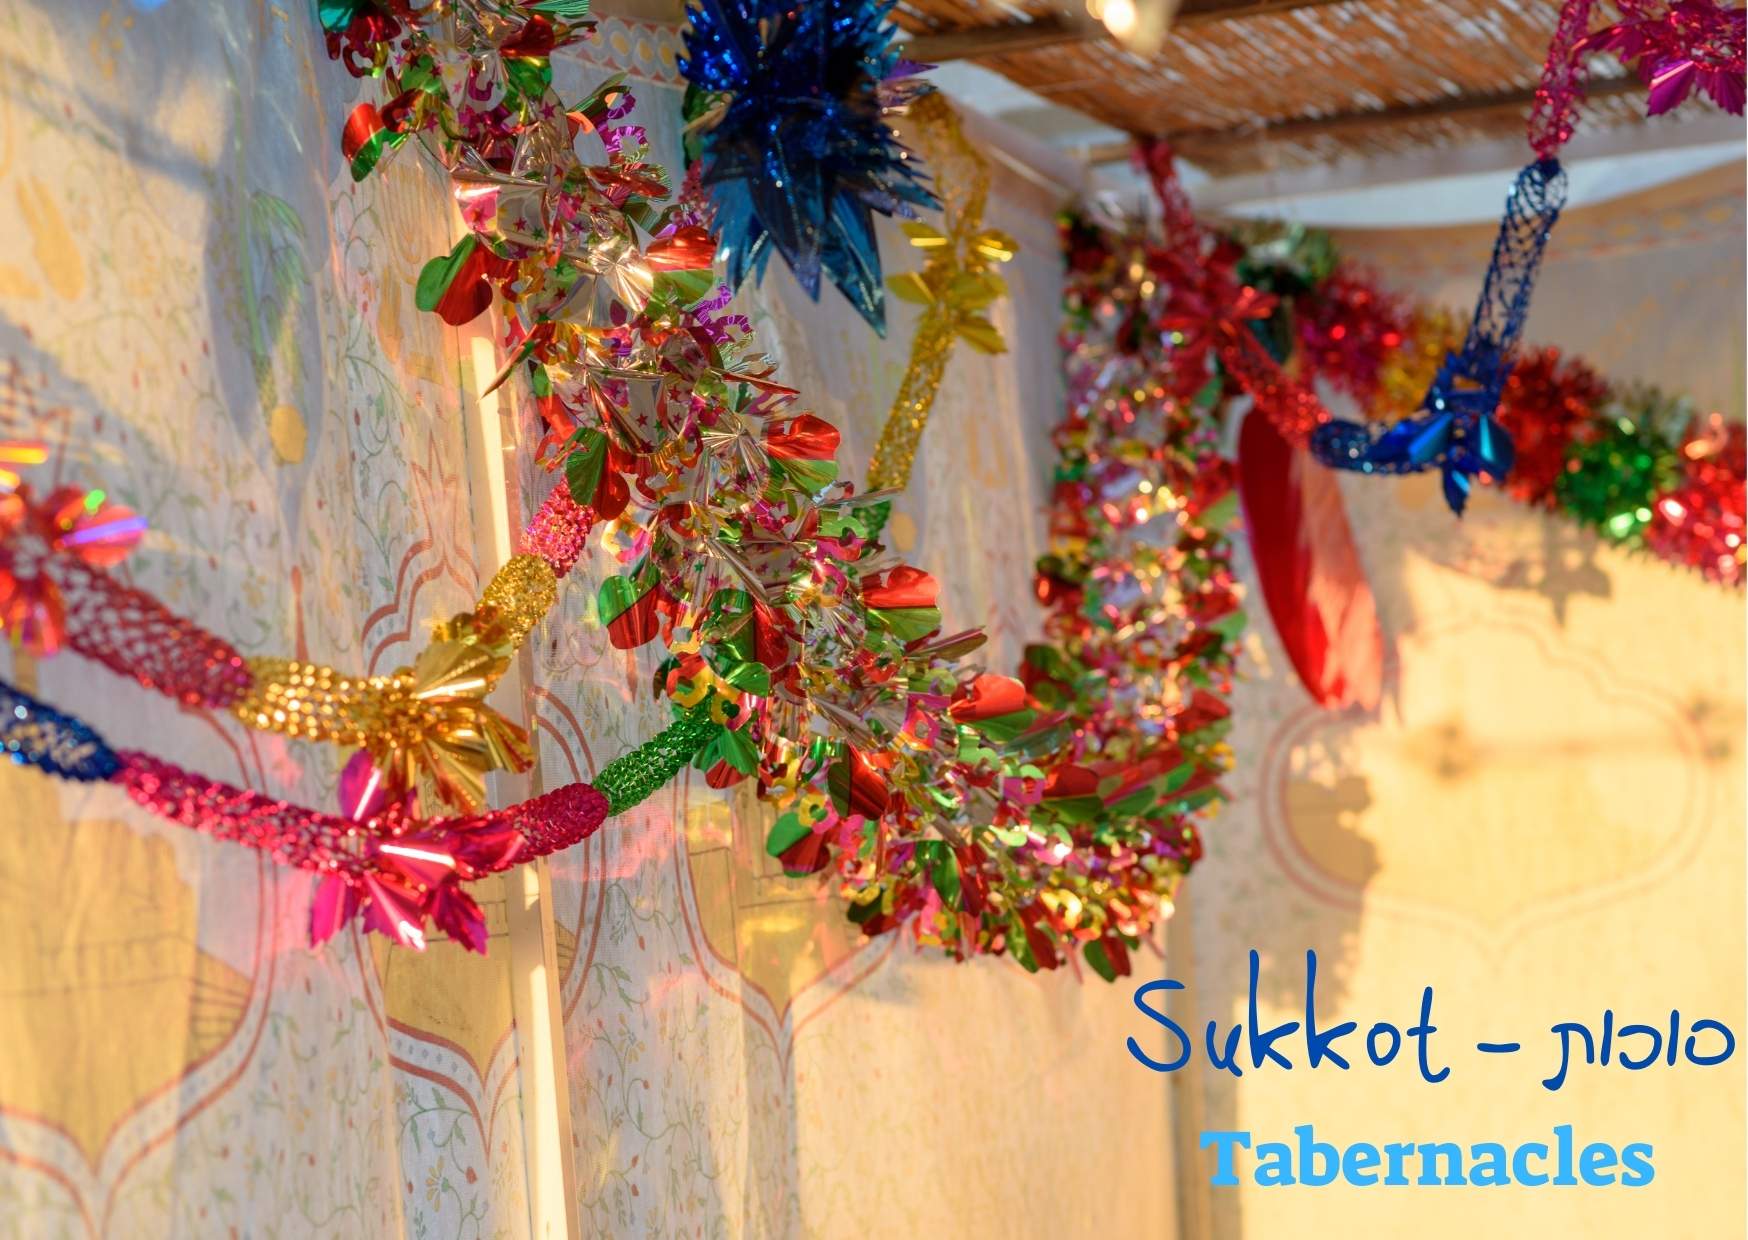 Sukkot - The Feast of Tabernacles